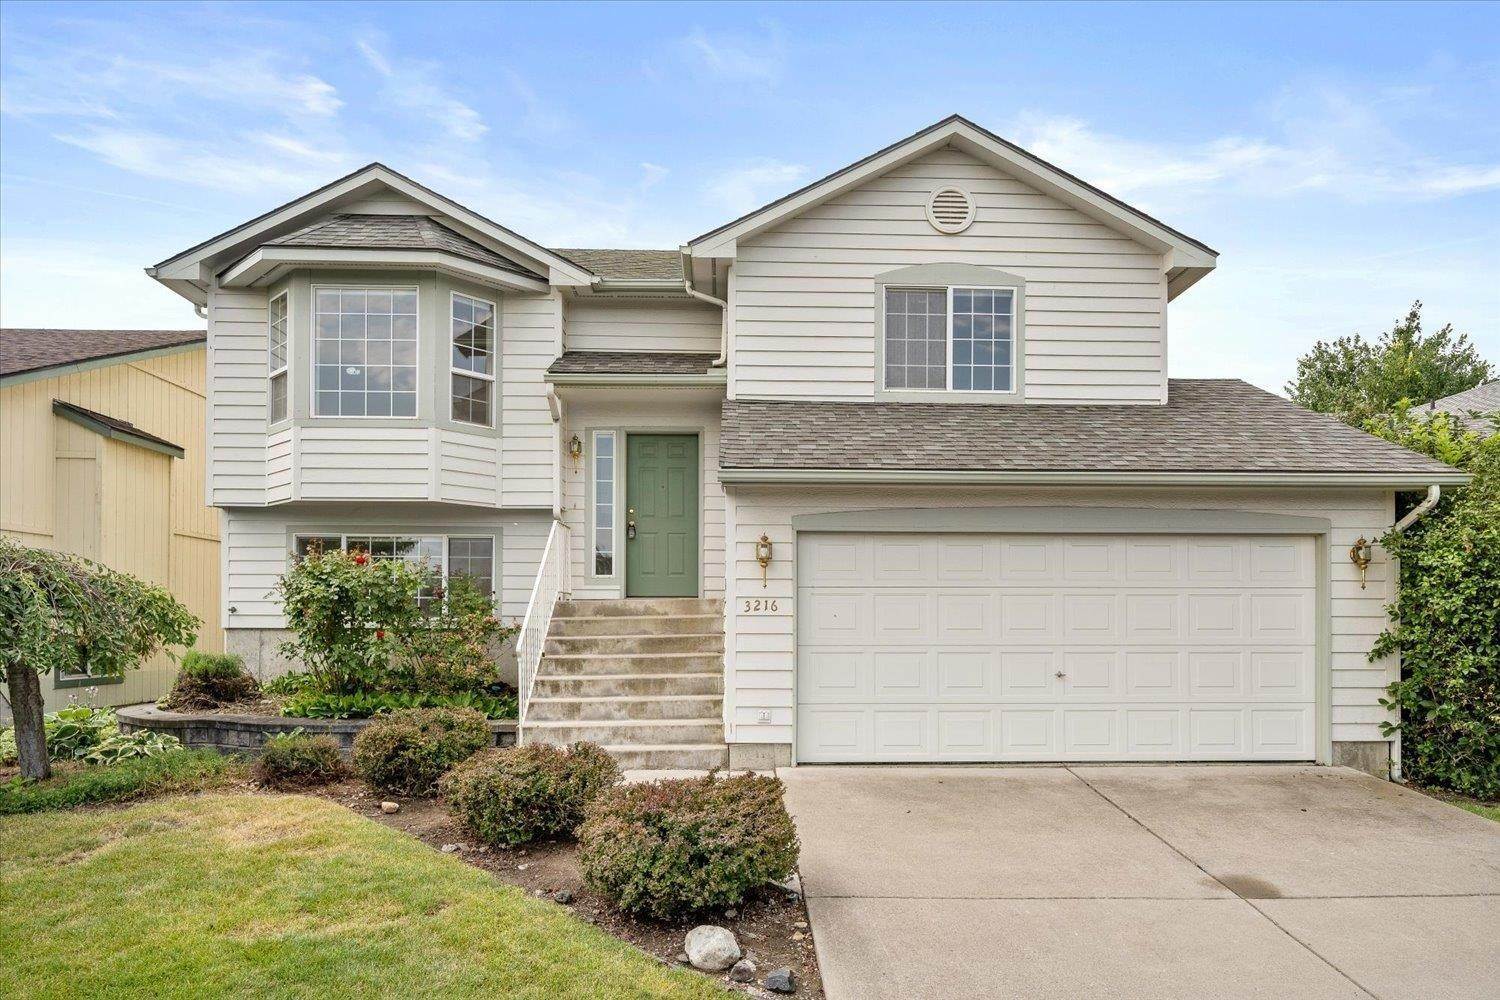 6. Single Family Homes for Sale at 3216 E 42nd Avenue Spokane, Washington 99223 United States